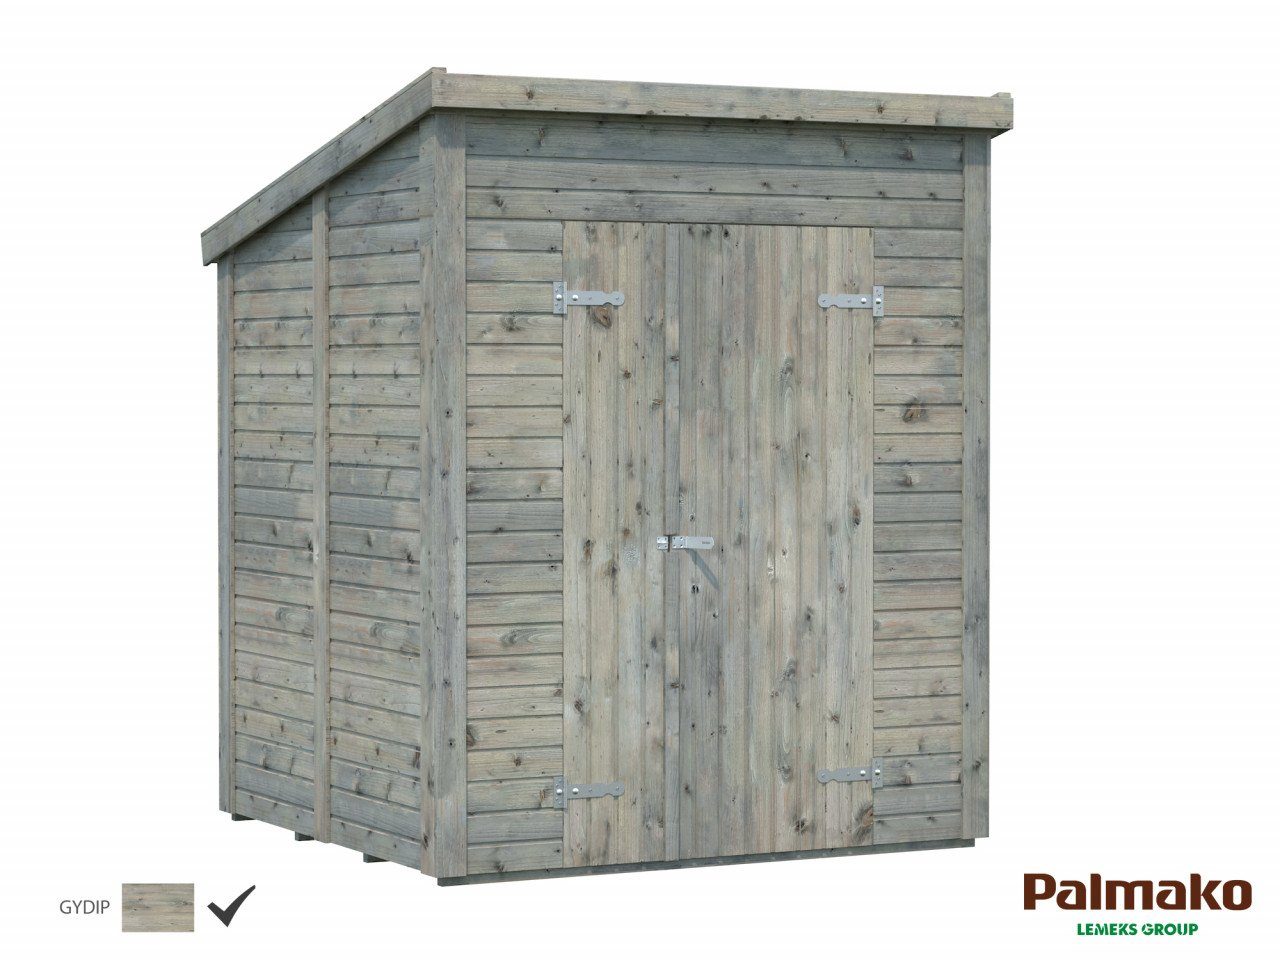 Palmako Gerätehaus Leif 3,1 cm farblos 183x170 BxT: Holz Gartenhaus